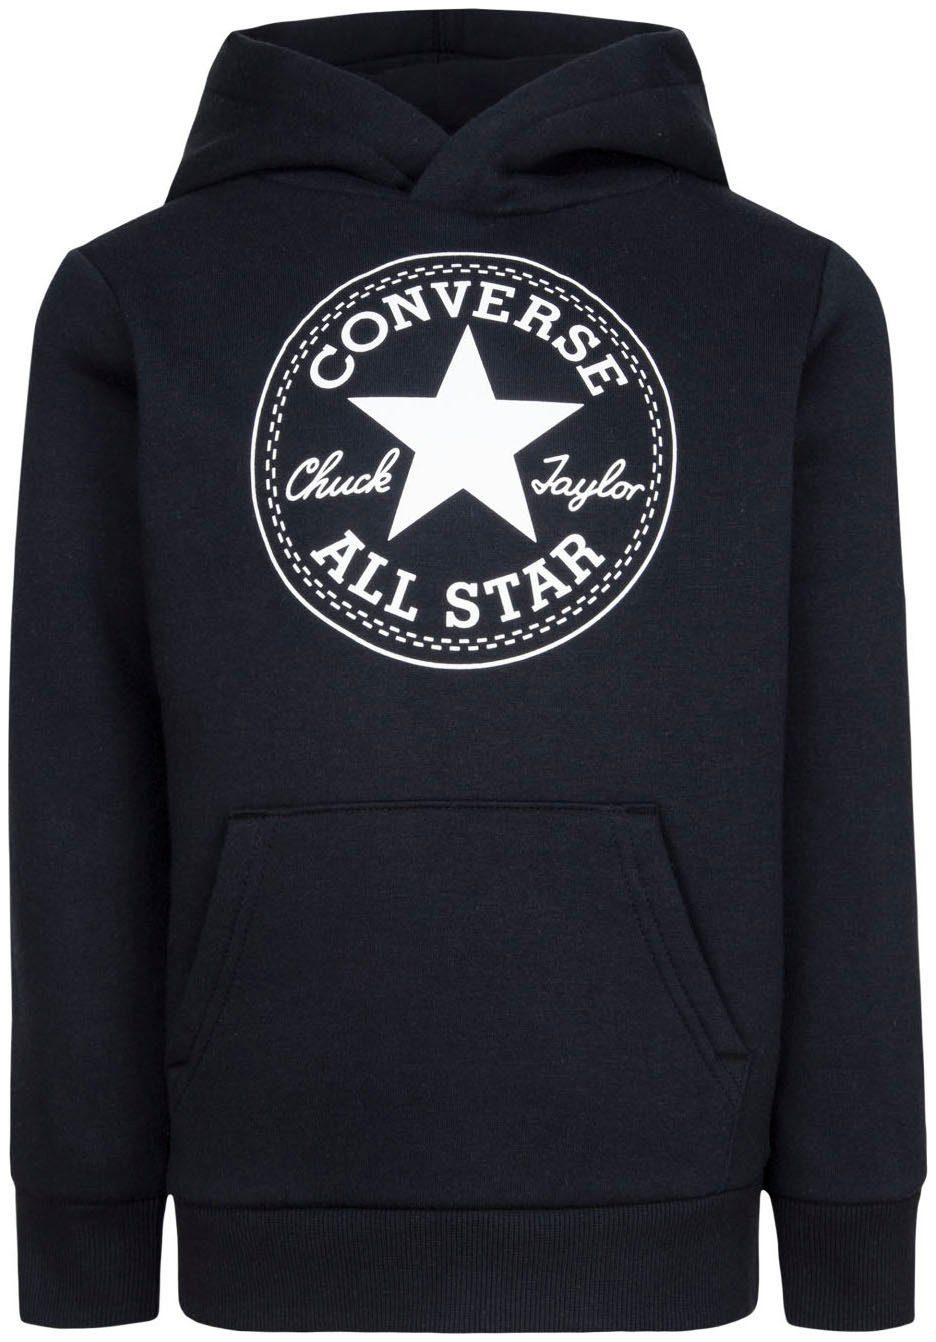 Converse Kapuzensweatshirt für Kinder black | Sweatshirts